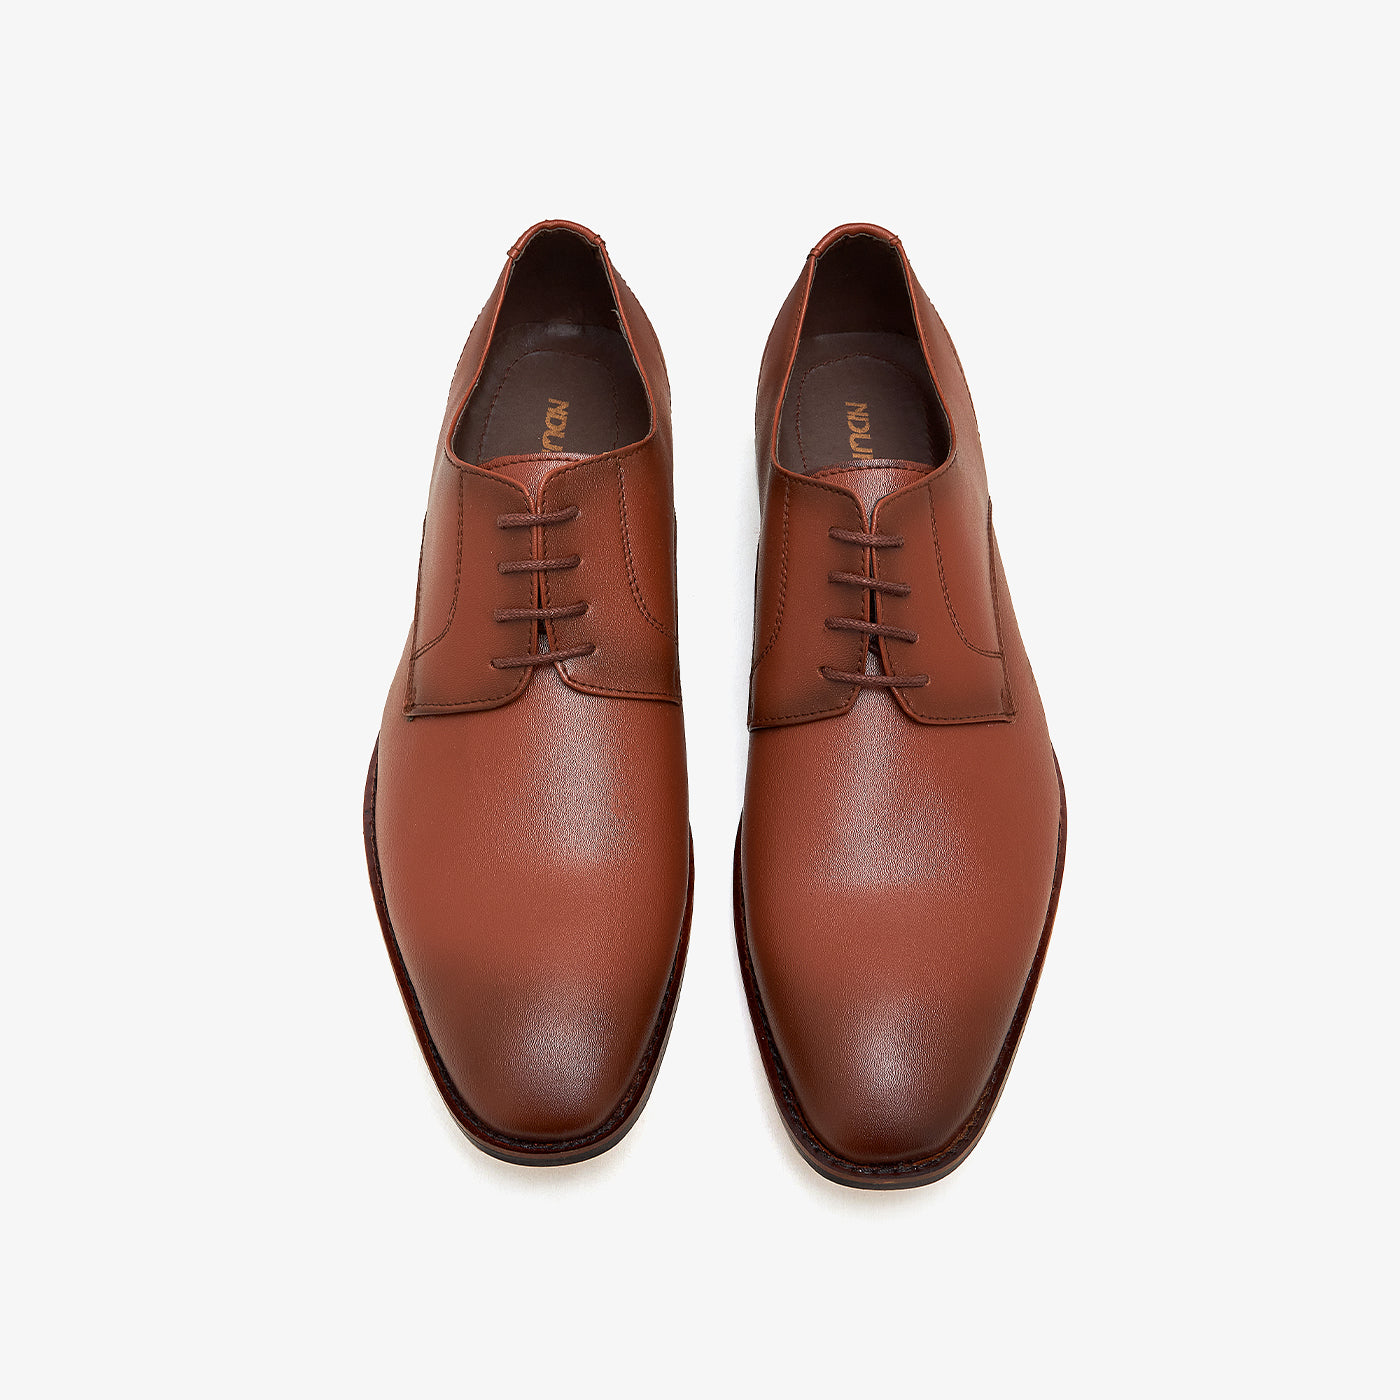 Men's Sophisticated Formal Shoes